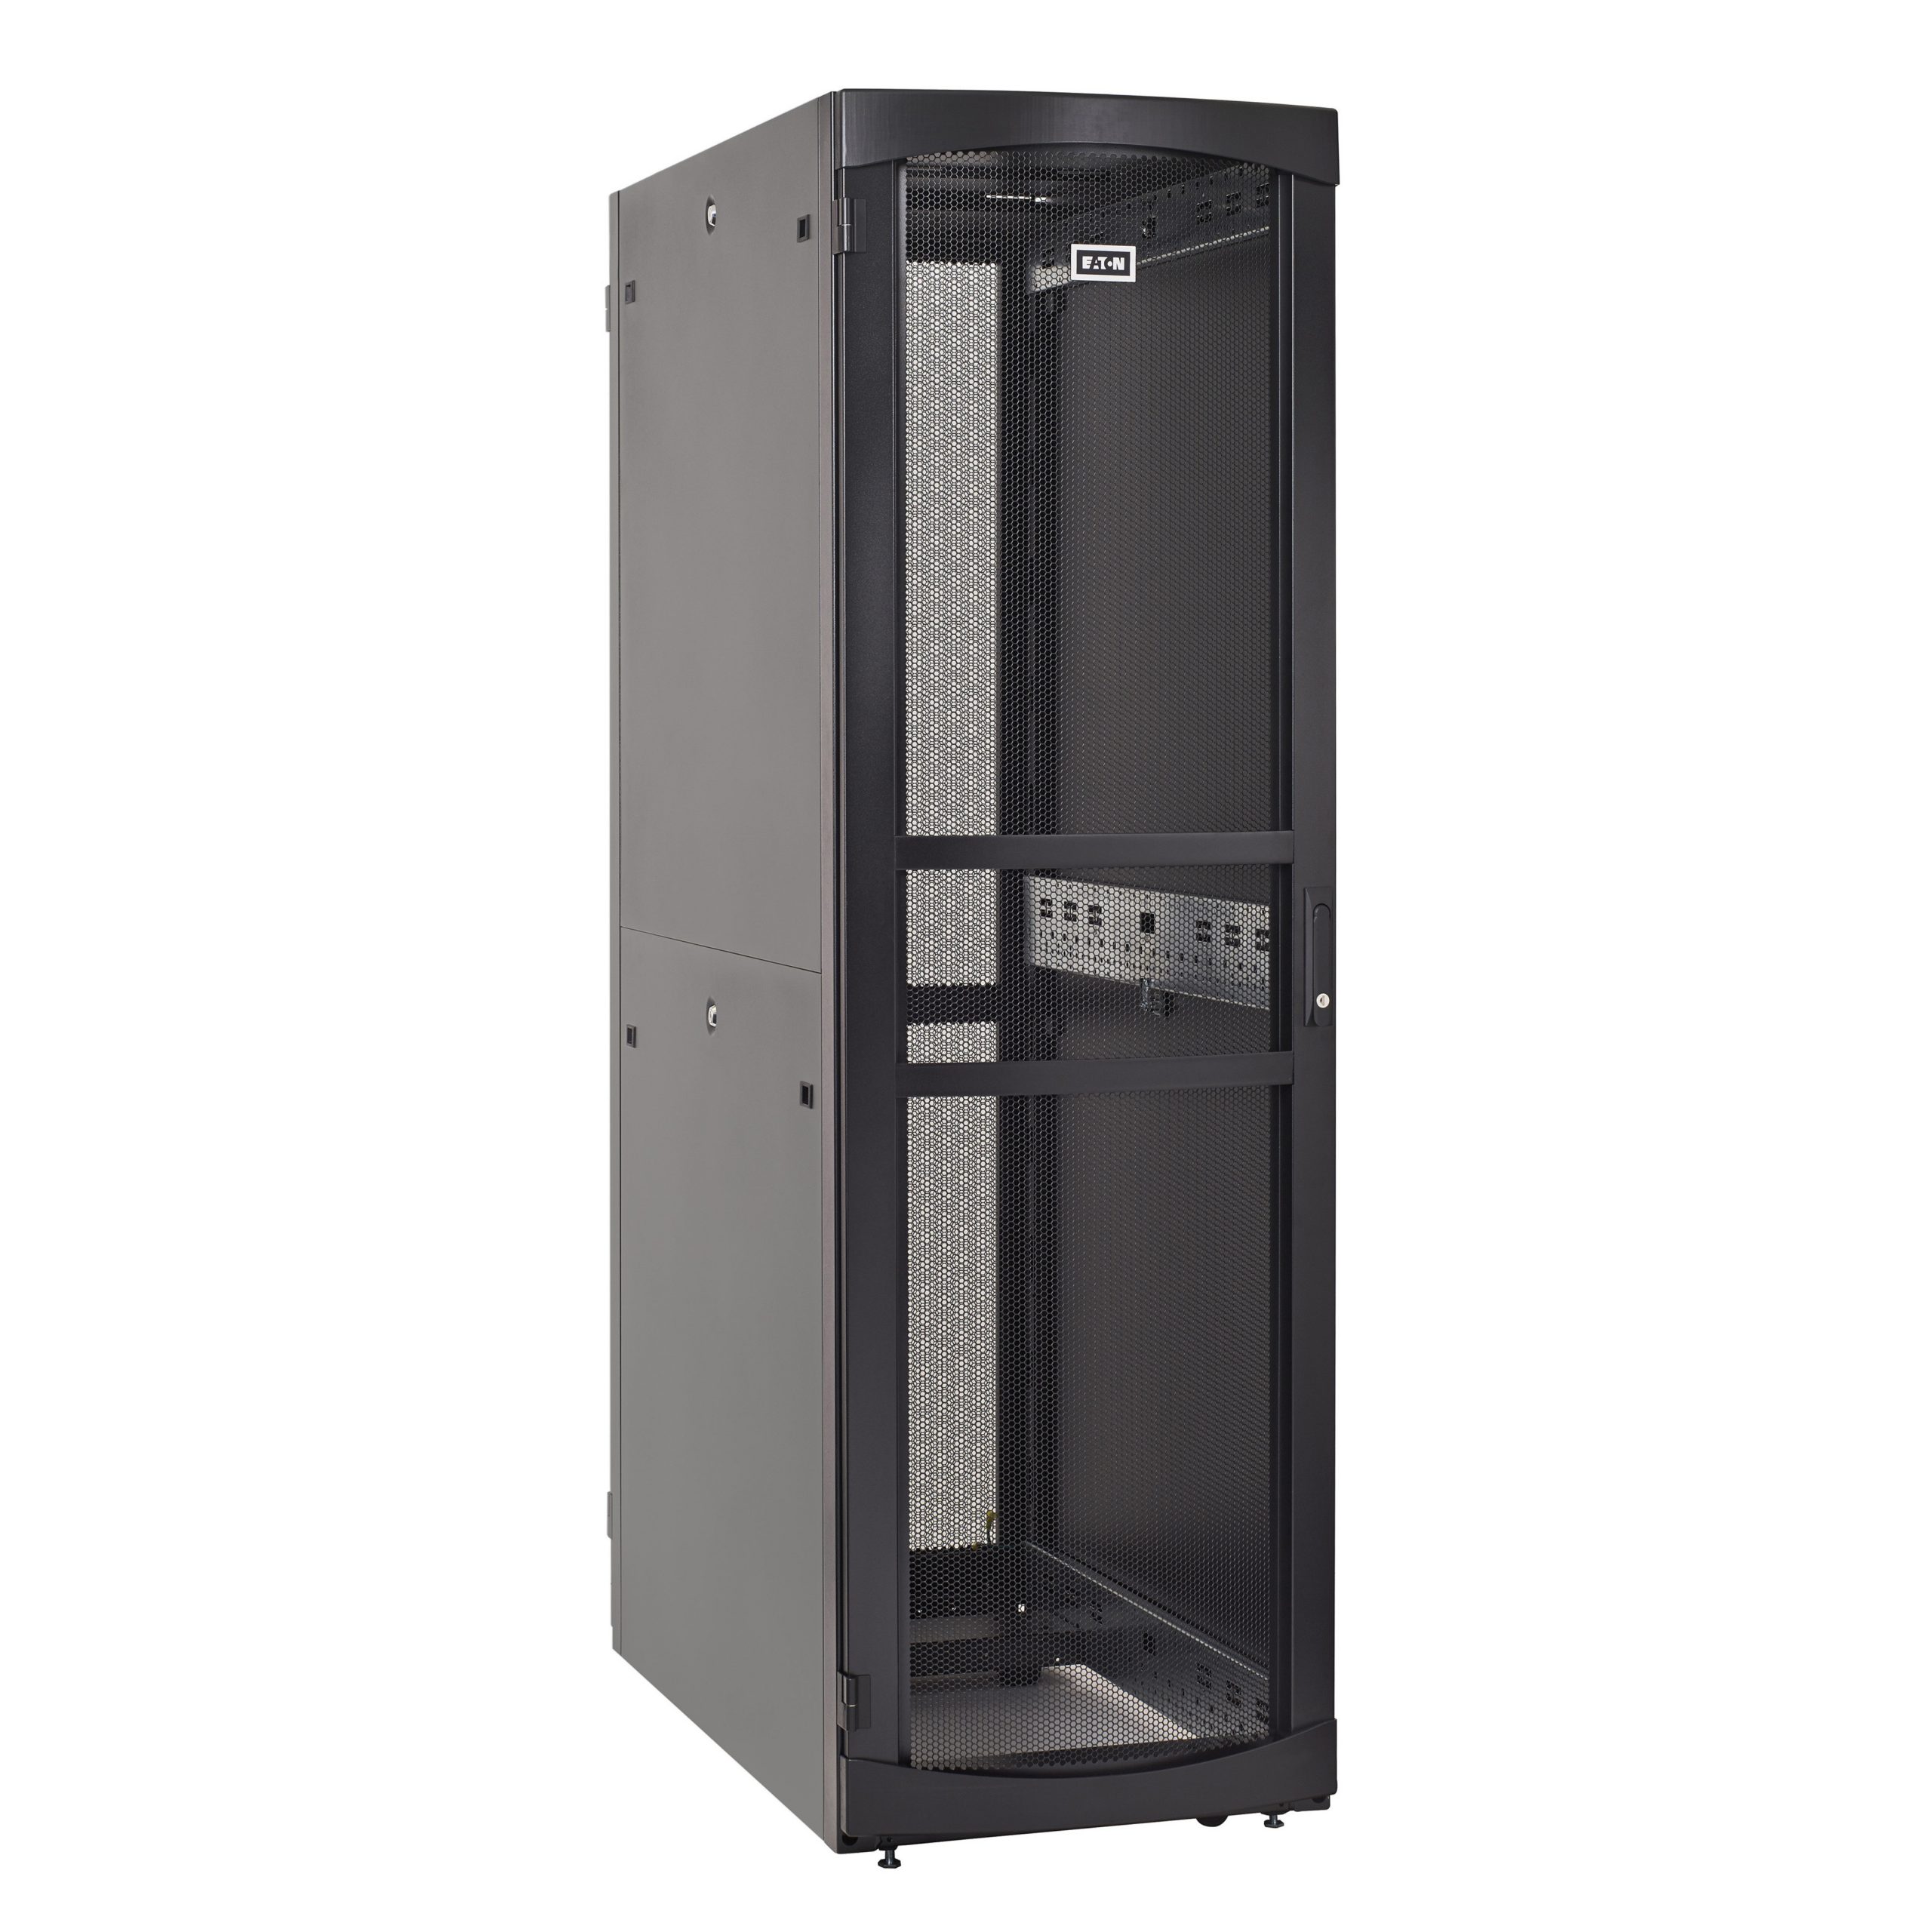 Eaton Enclosure,45U, 800mm W x 1000mm D BlackFor Server, UPS48U Rack HeightBlack RSV4880B